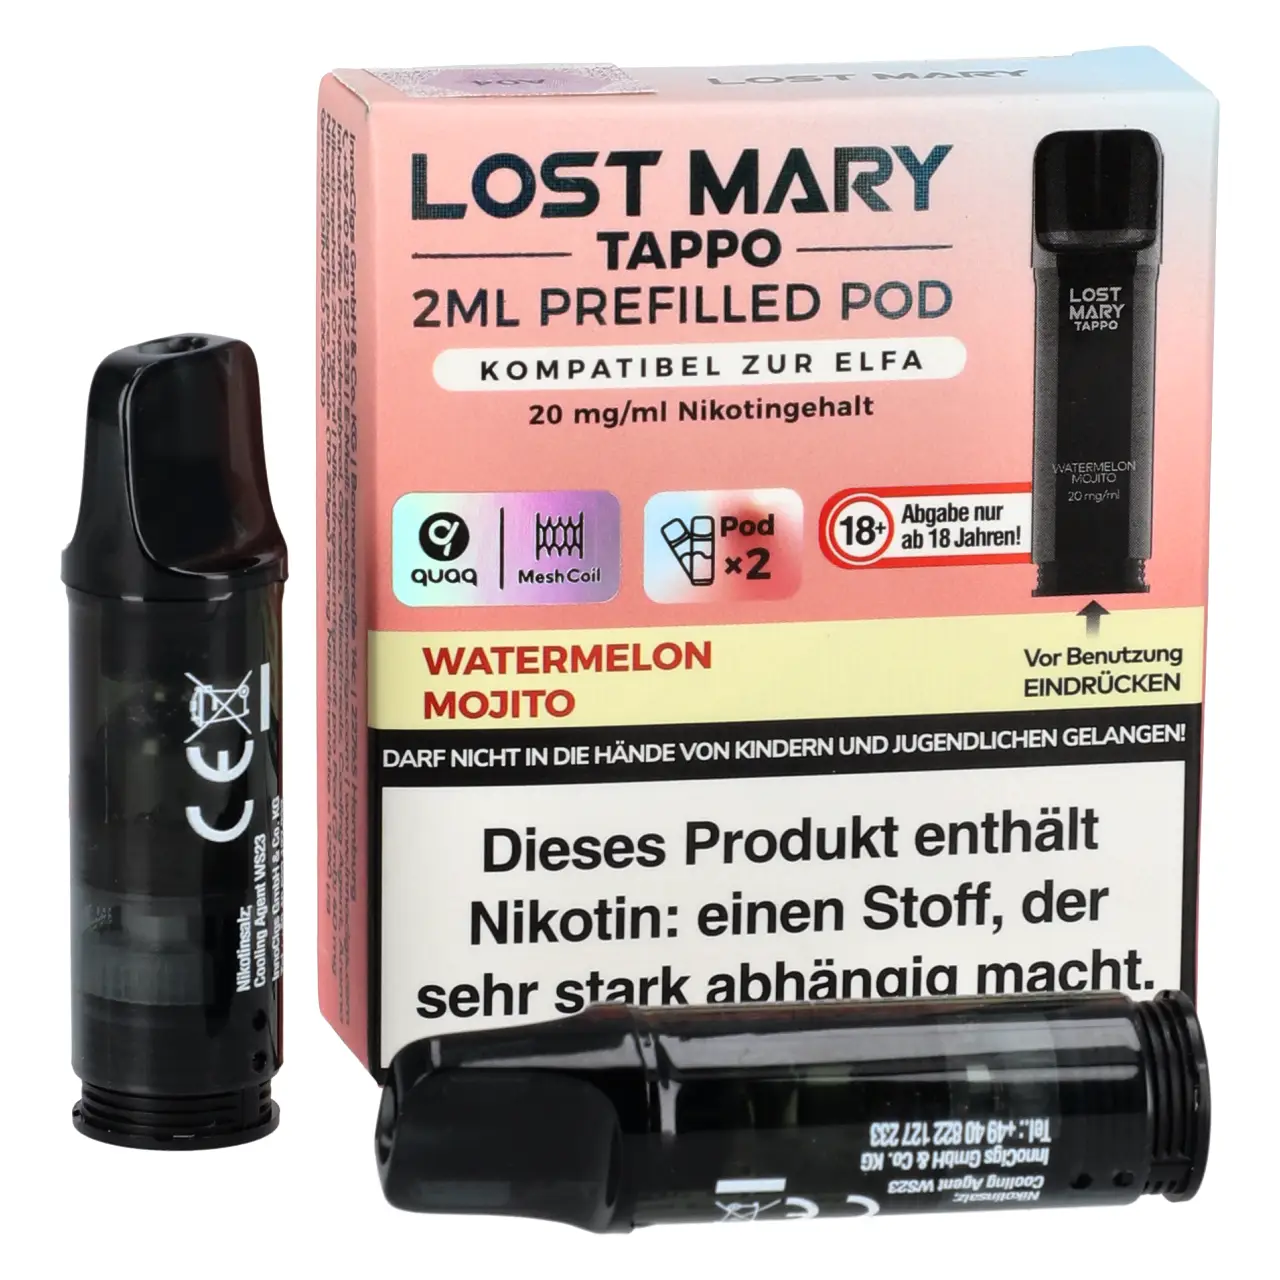 Lost Mary Tappo Prefilled Pod - Watermelon Mojito - 2er Packung